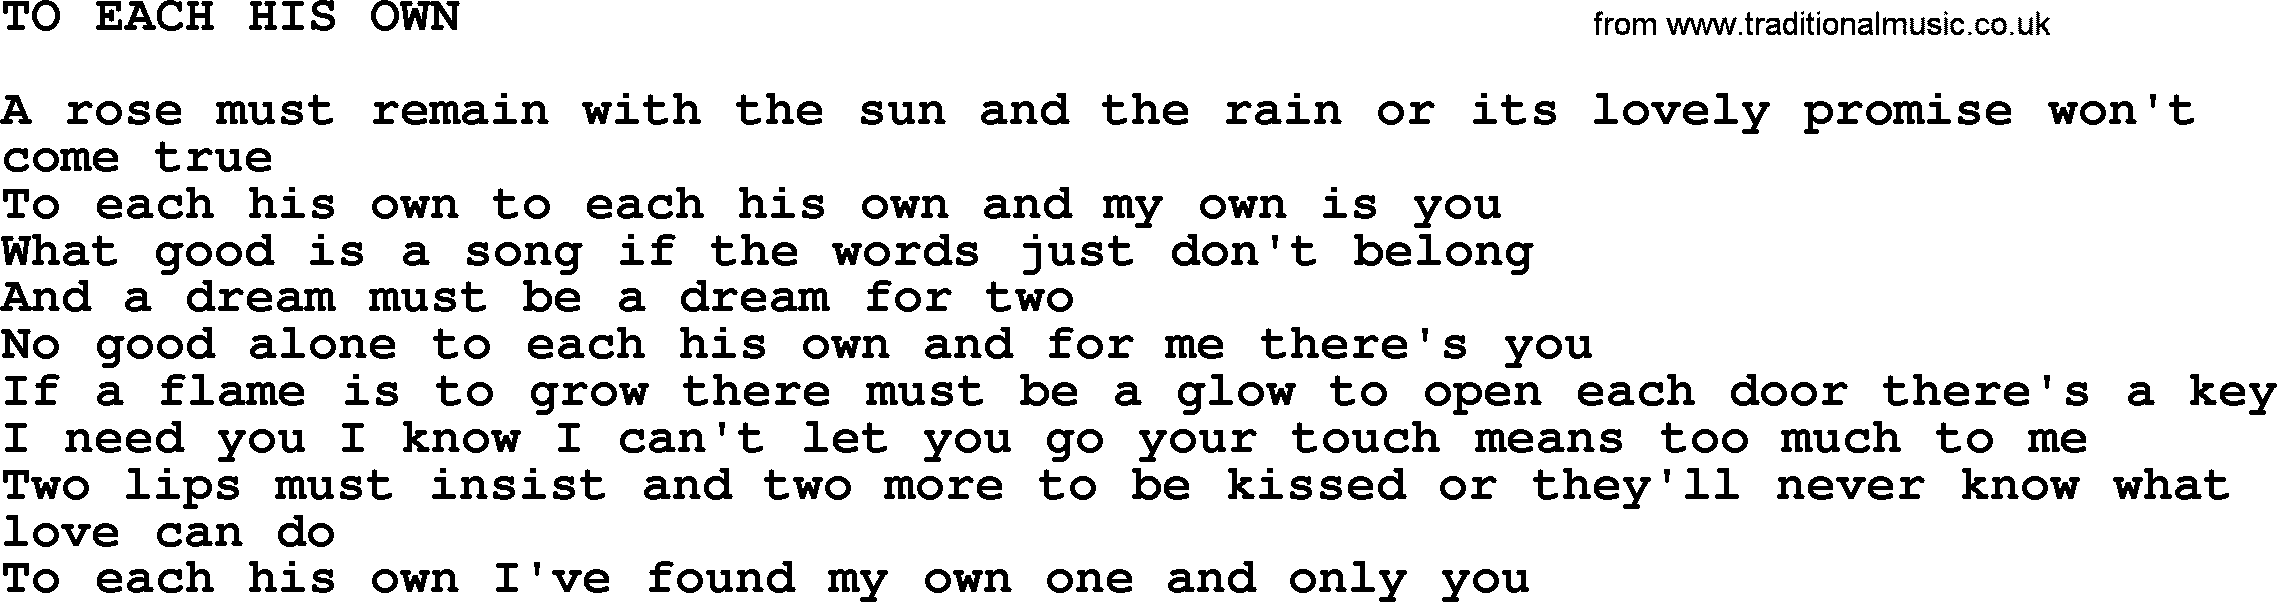 Merle Haggard song: To Each His Own, lyrics.